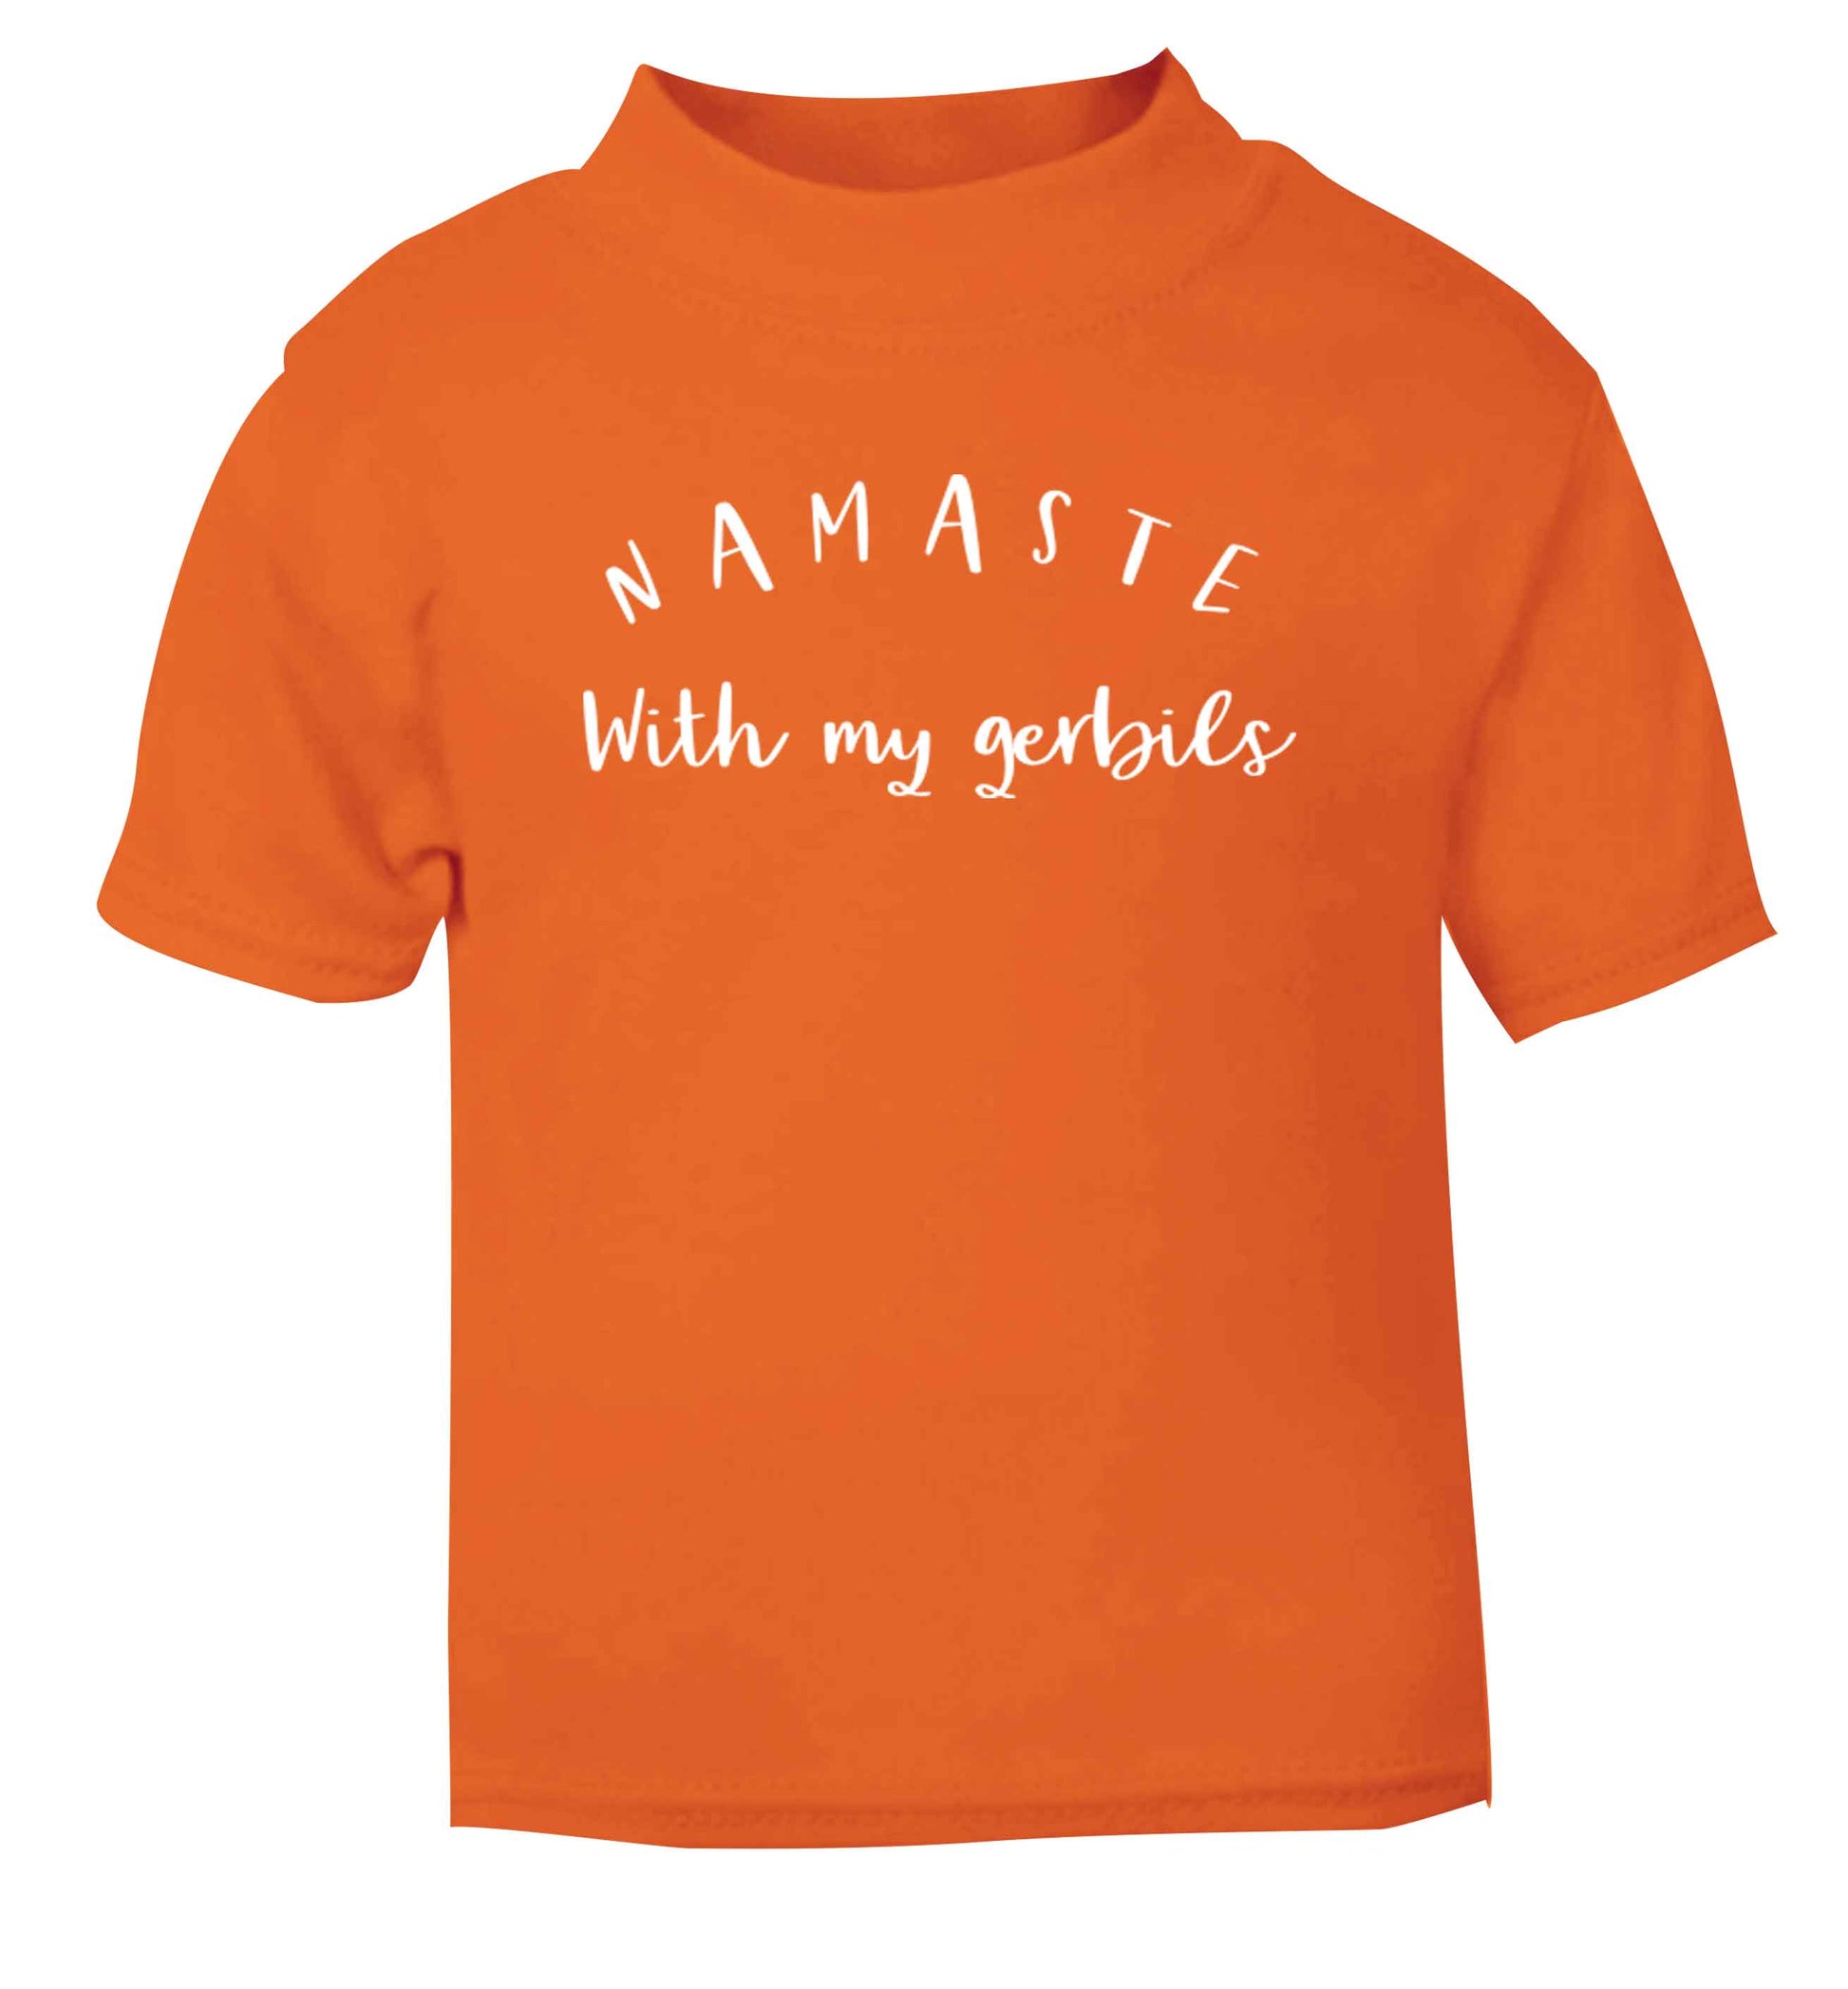 Namaste with my gerbils orange Baby Toddler Tshirt 2 Years